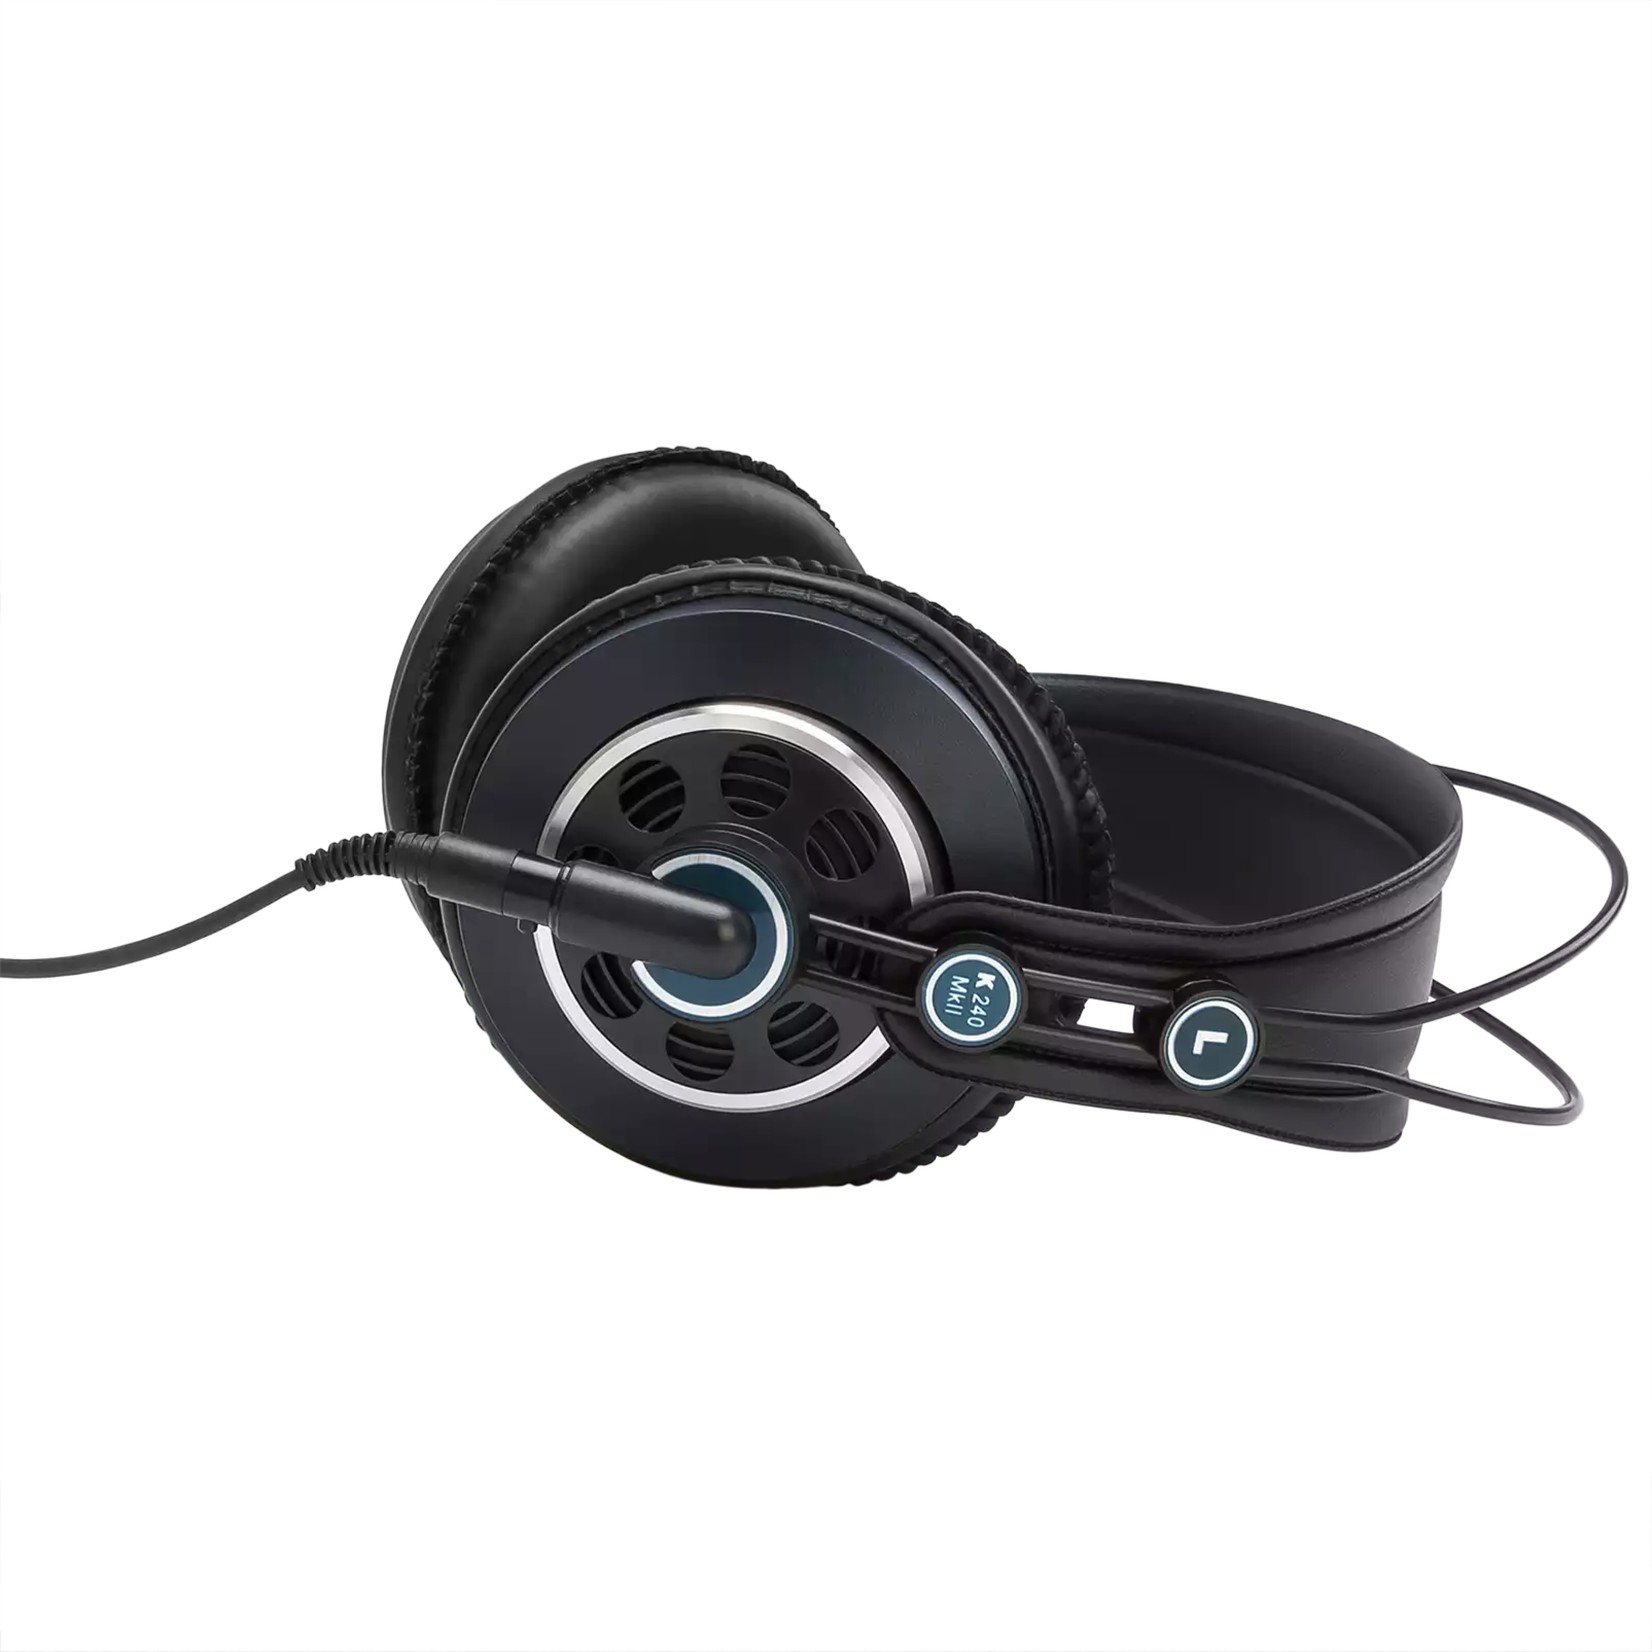 AKG AKG K240 MKII Professional Semi-Open Studio Monitor Headphones